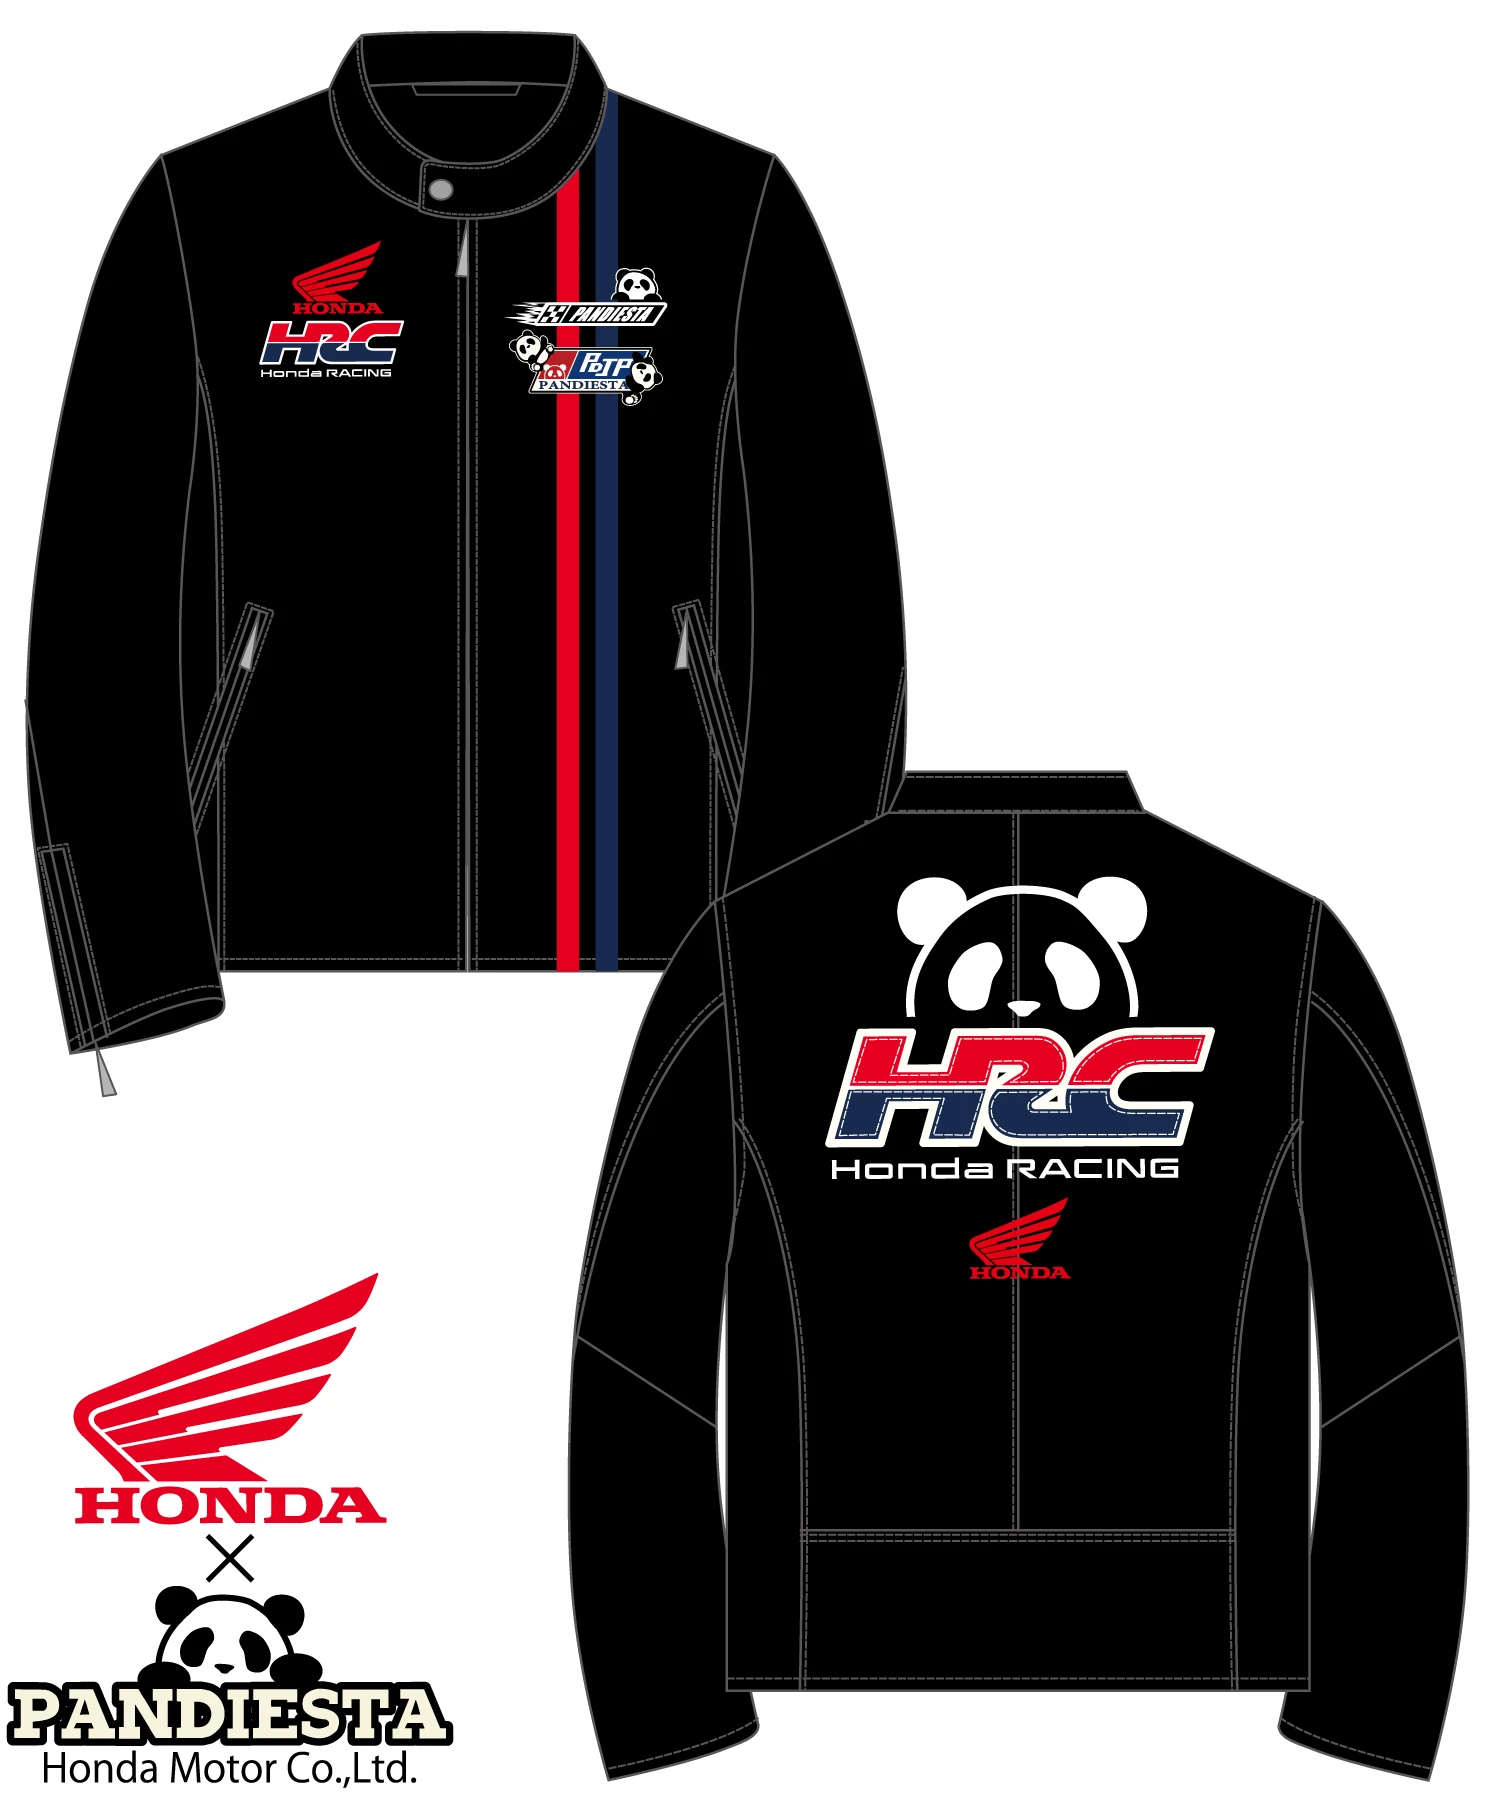 SB Honda×Pandiesta HRC ラムレザー レーシングジャケット コラボ企画 